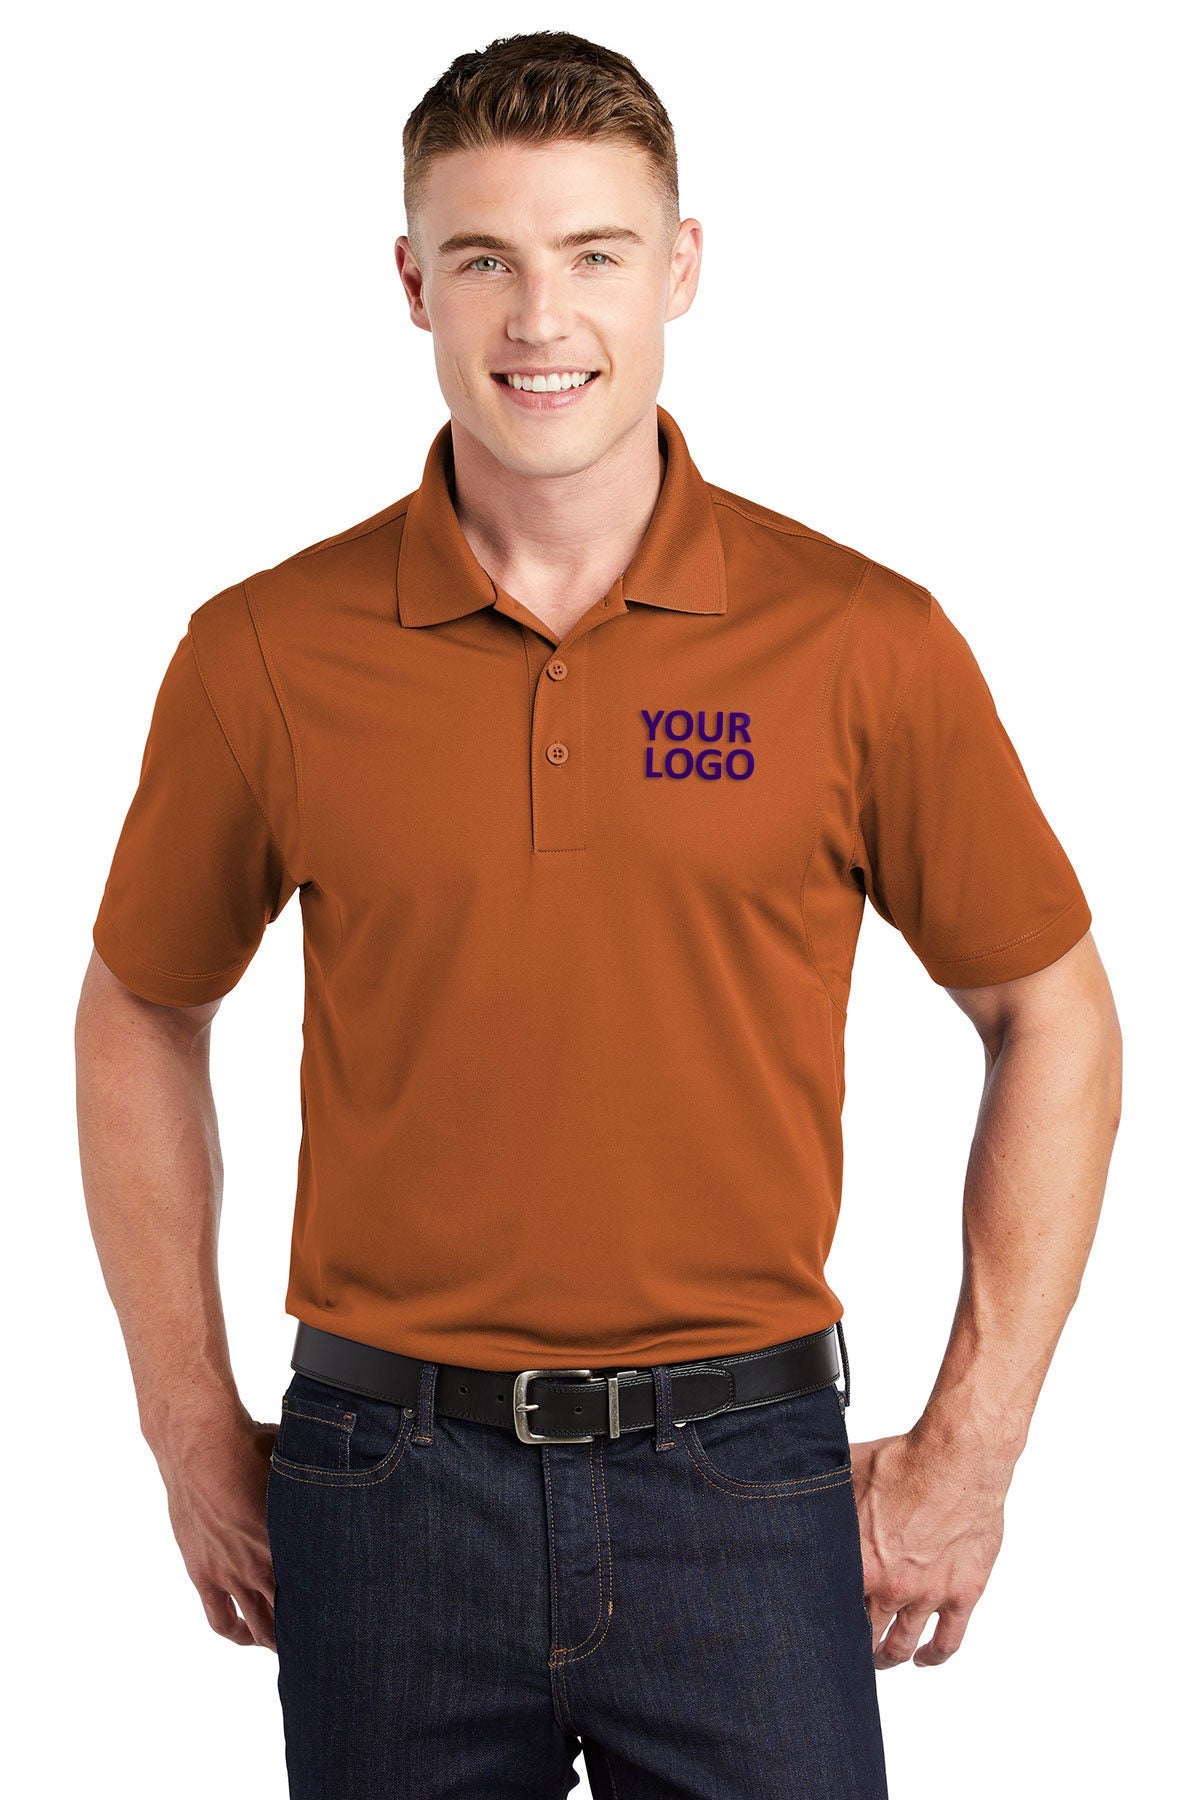 Sport-Tek Texas Orange ST650 custom logo polo shirts embroidered